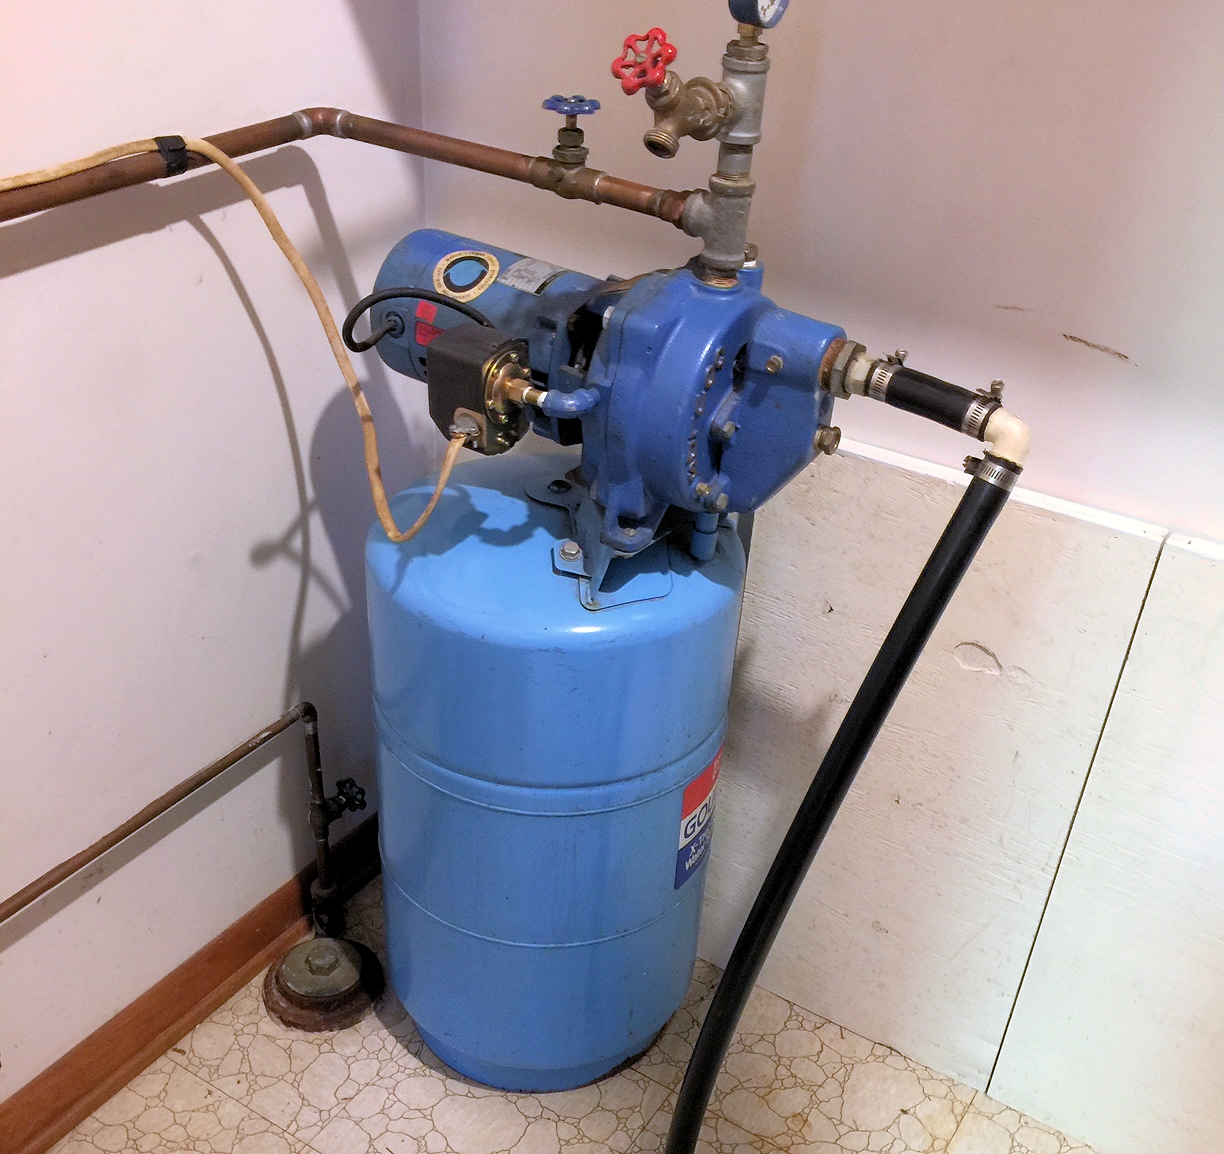 Cistern equipment